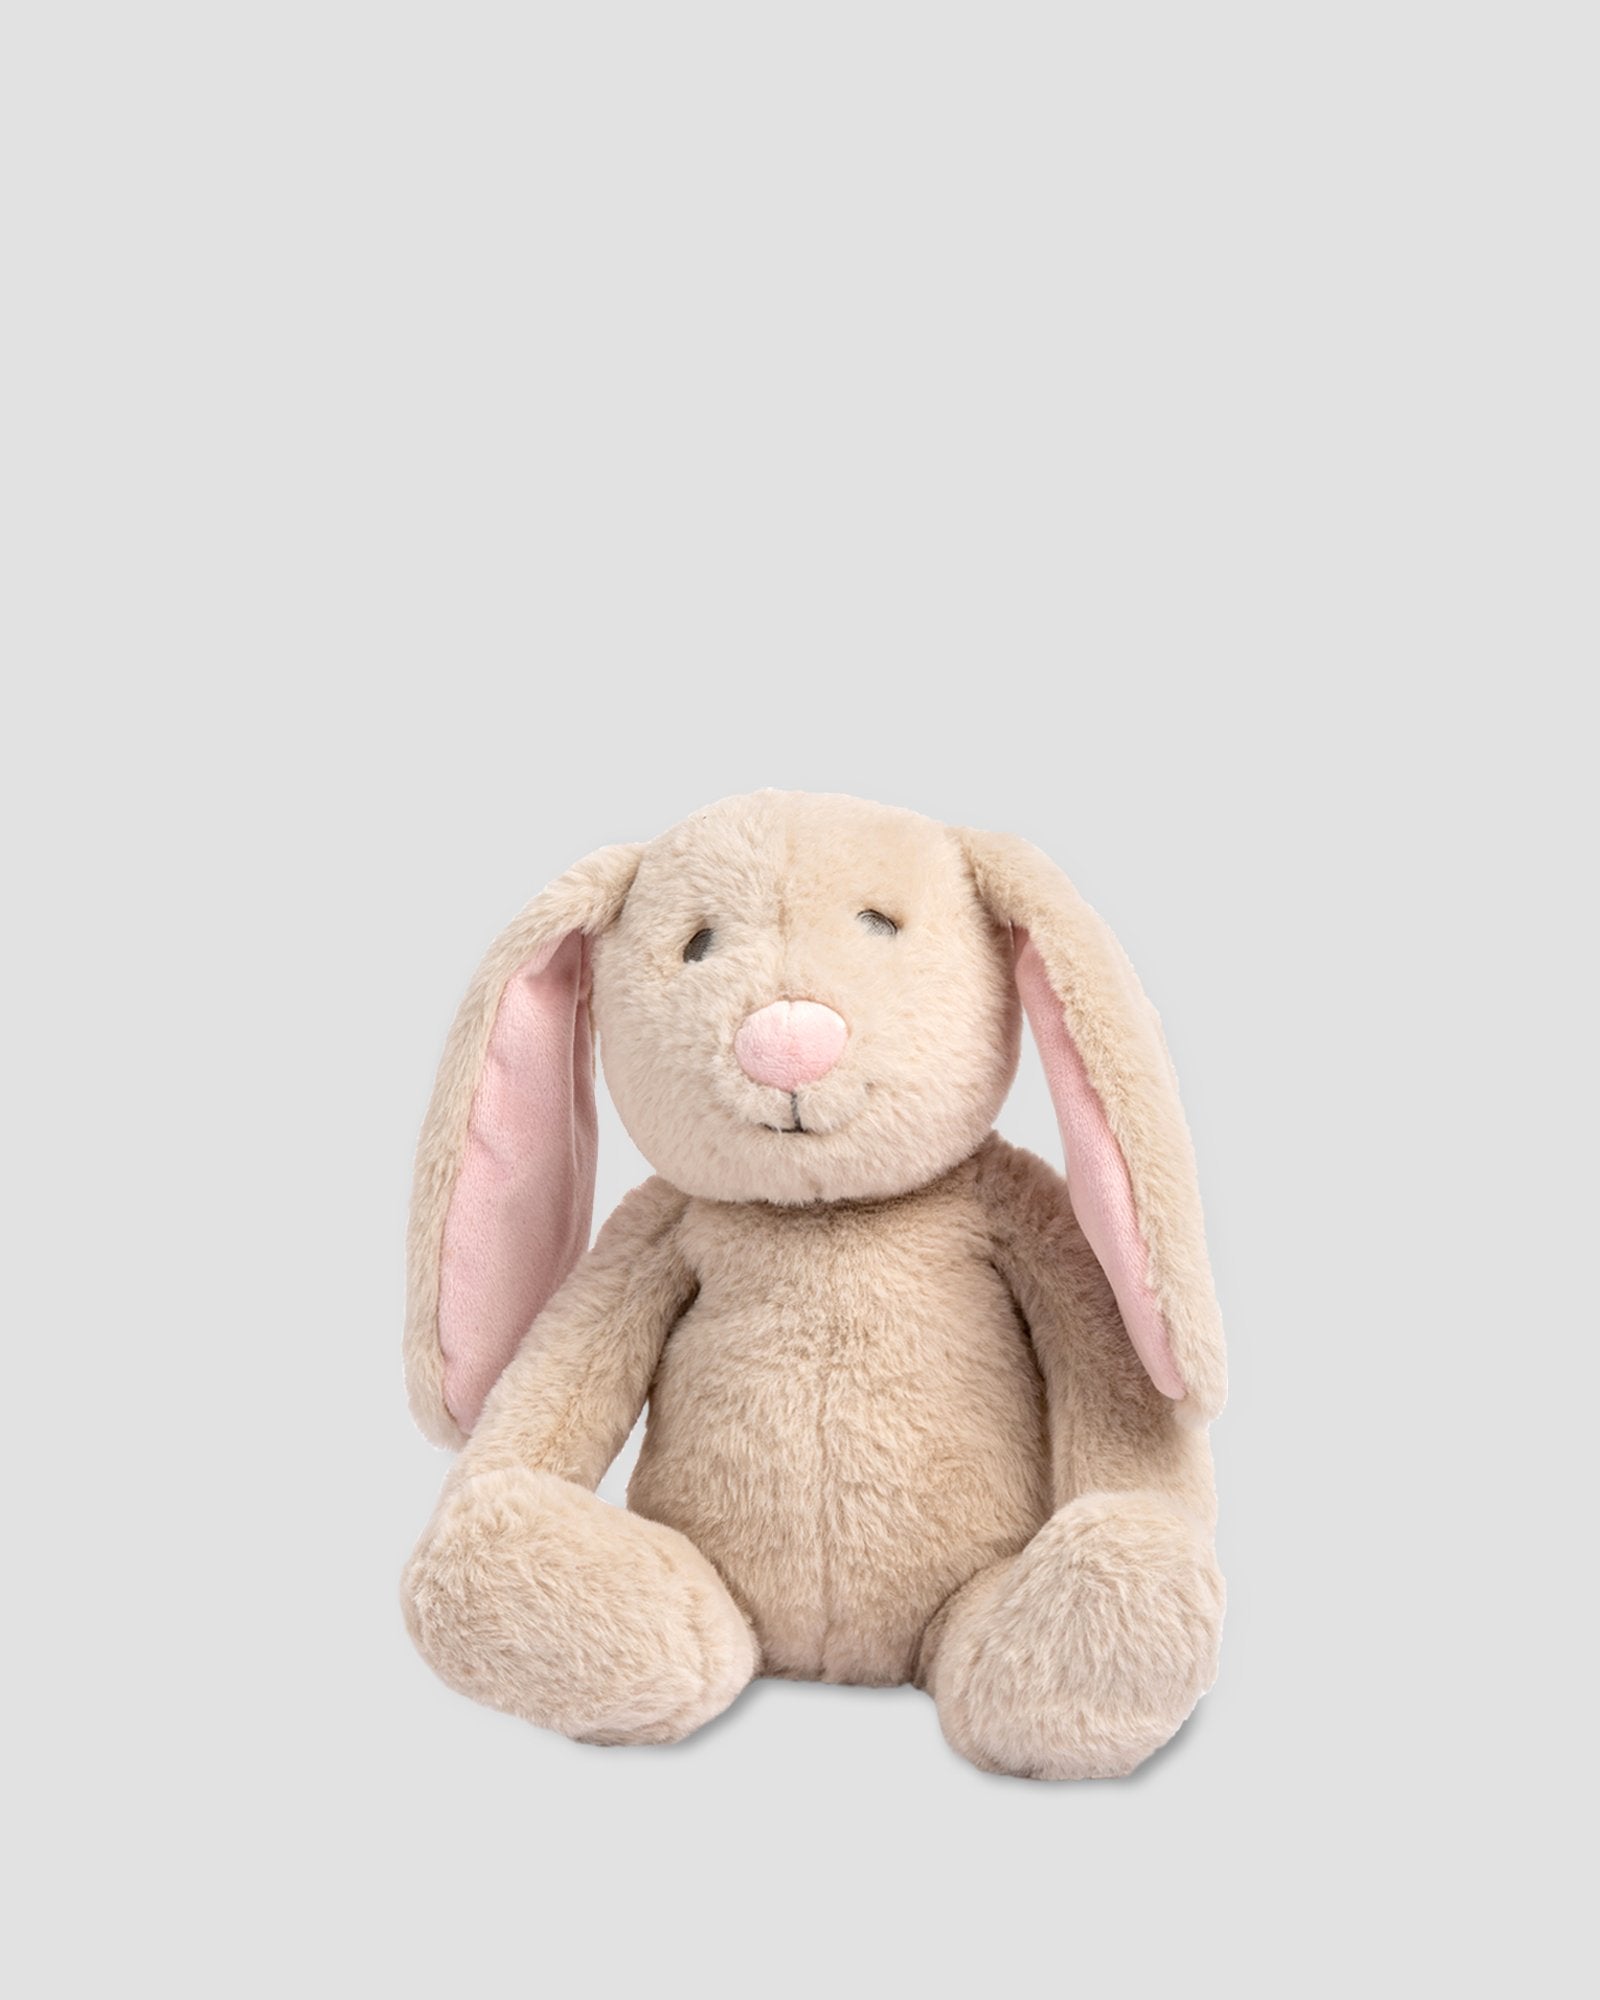 Soft Plush Baby Toy - Ballerina Bunny